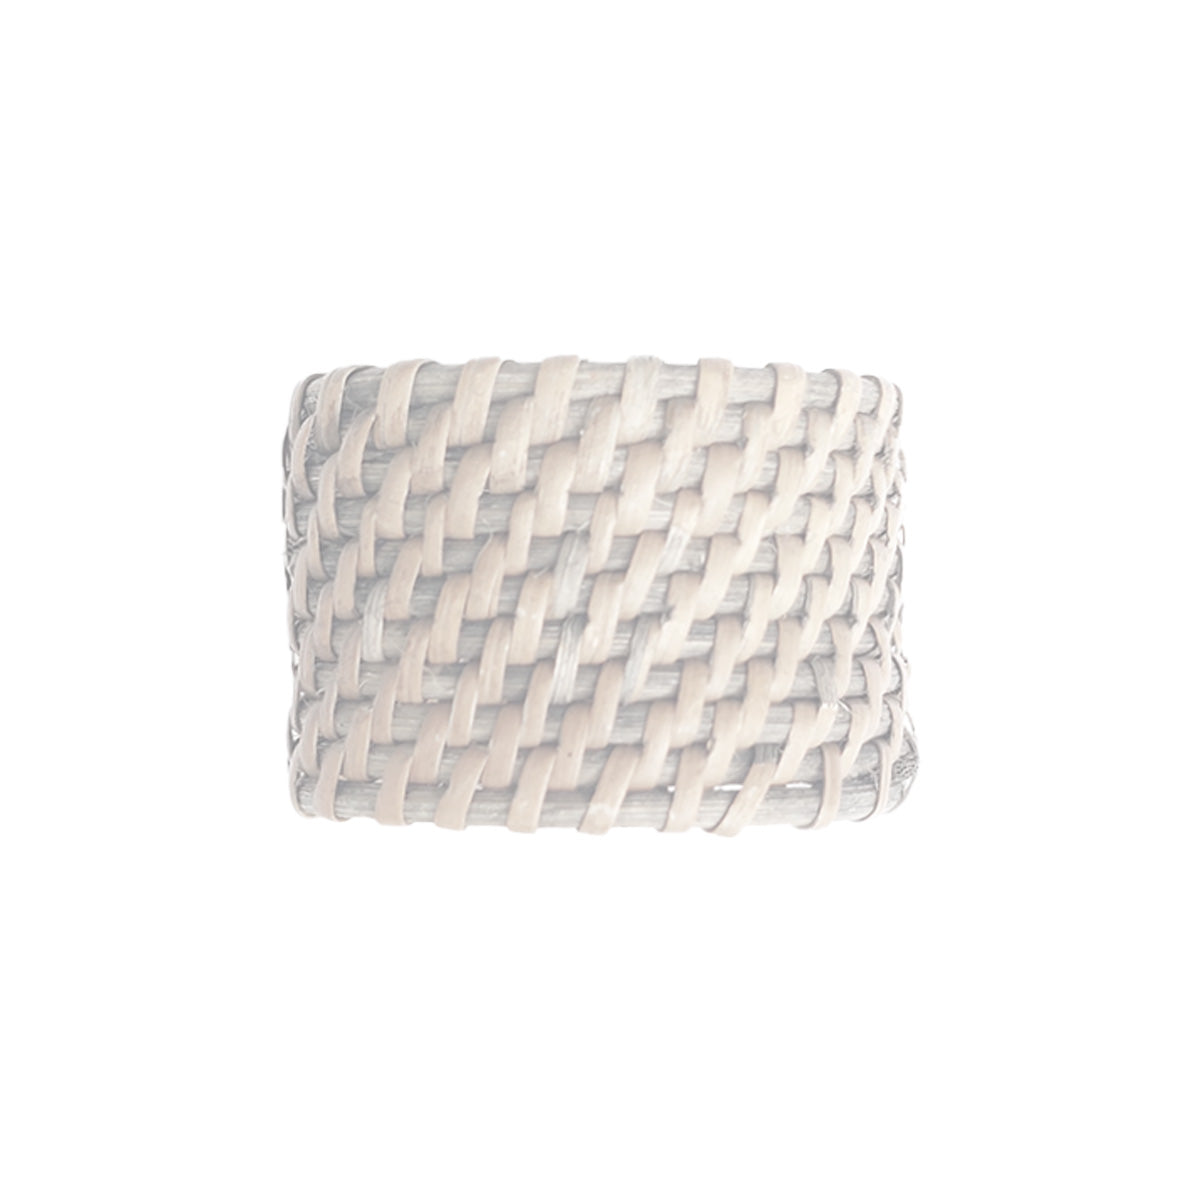 Cane napkin ring - White